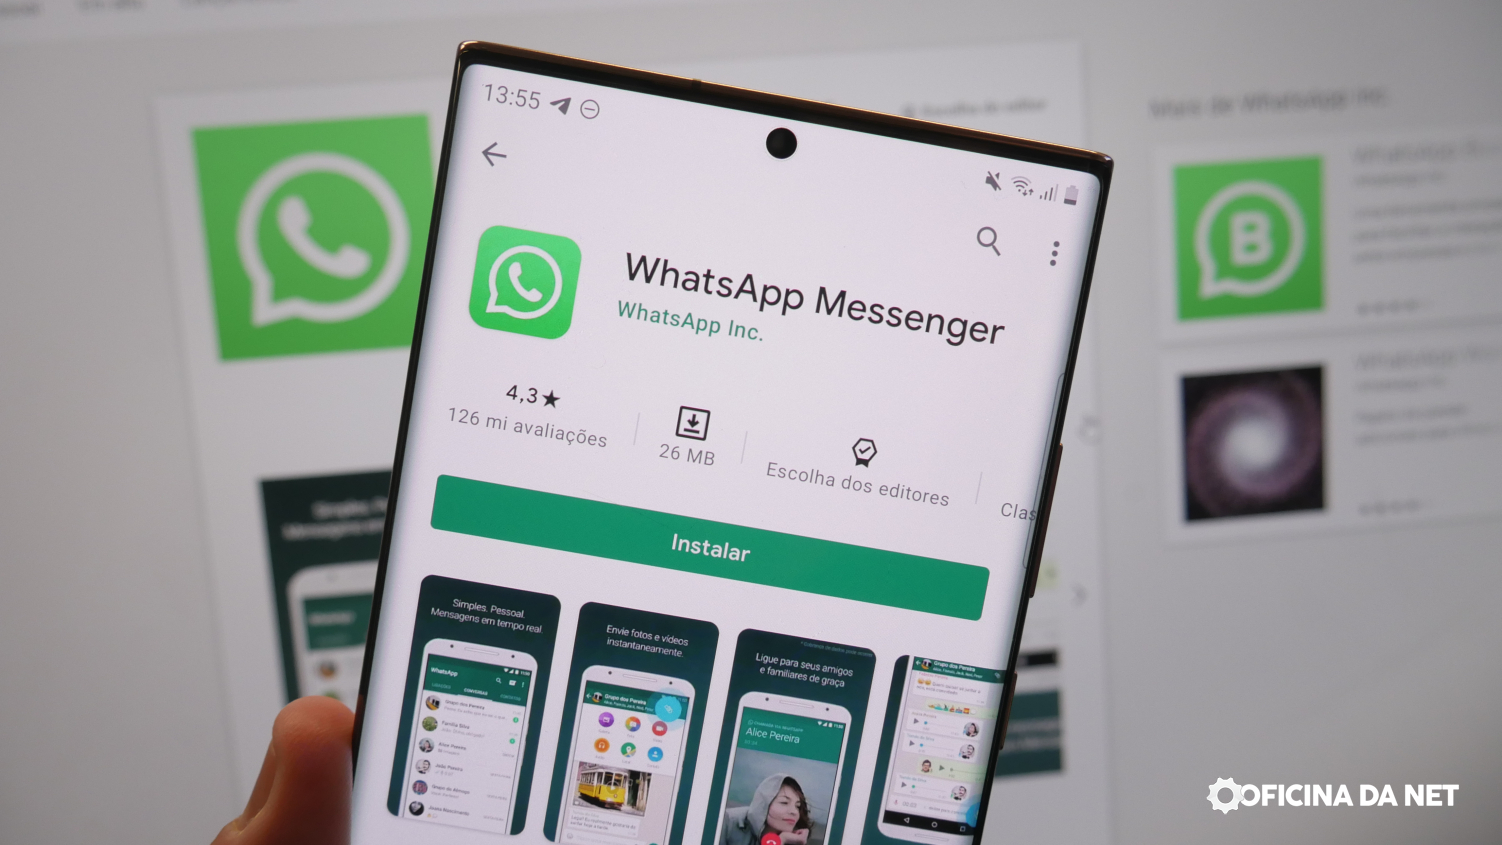 WhatsApp parou? Aplicativo enfrenta instabilidade - Olhar Digital